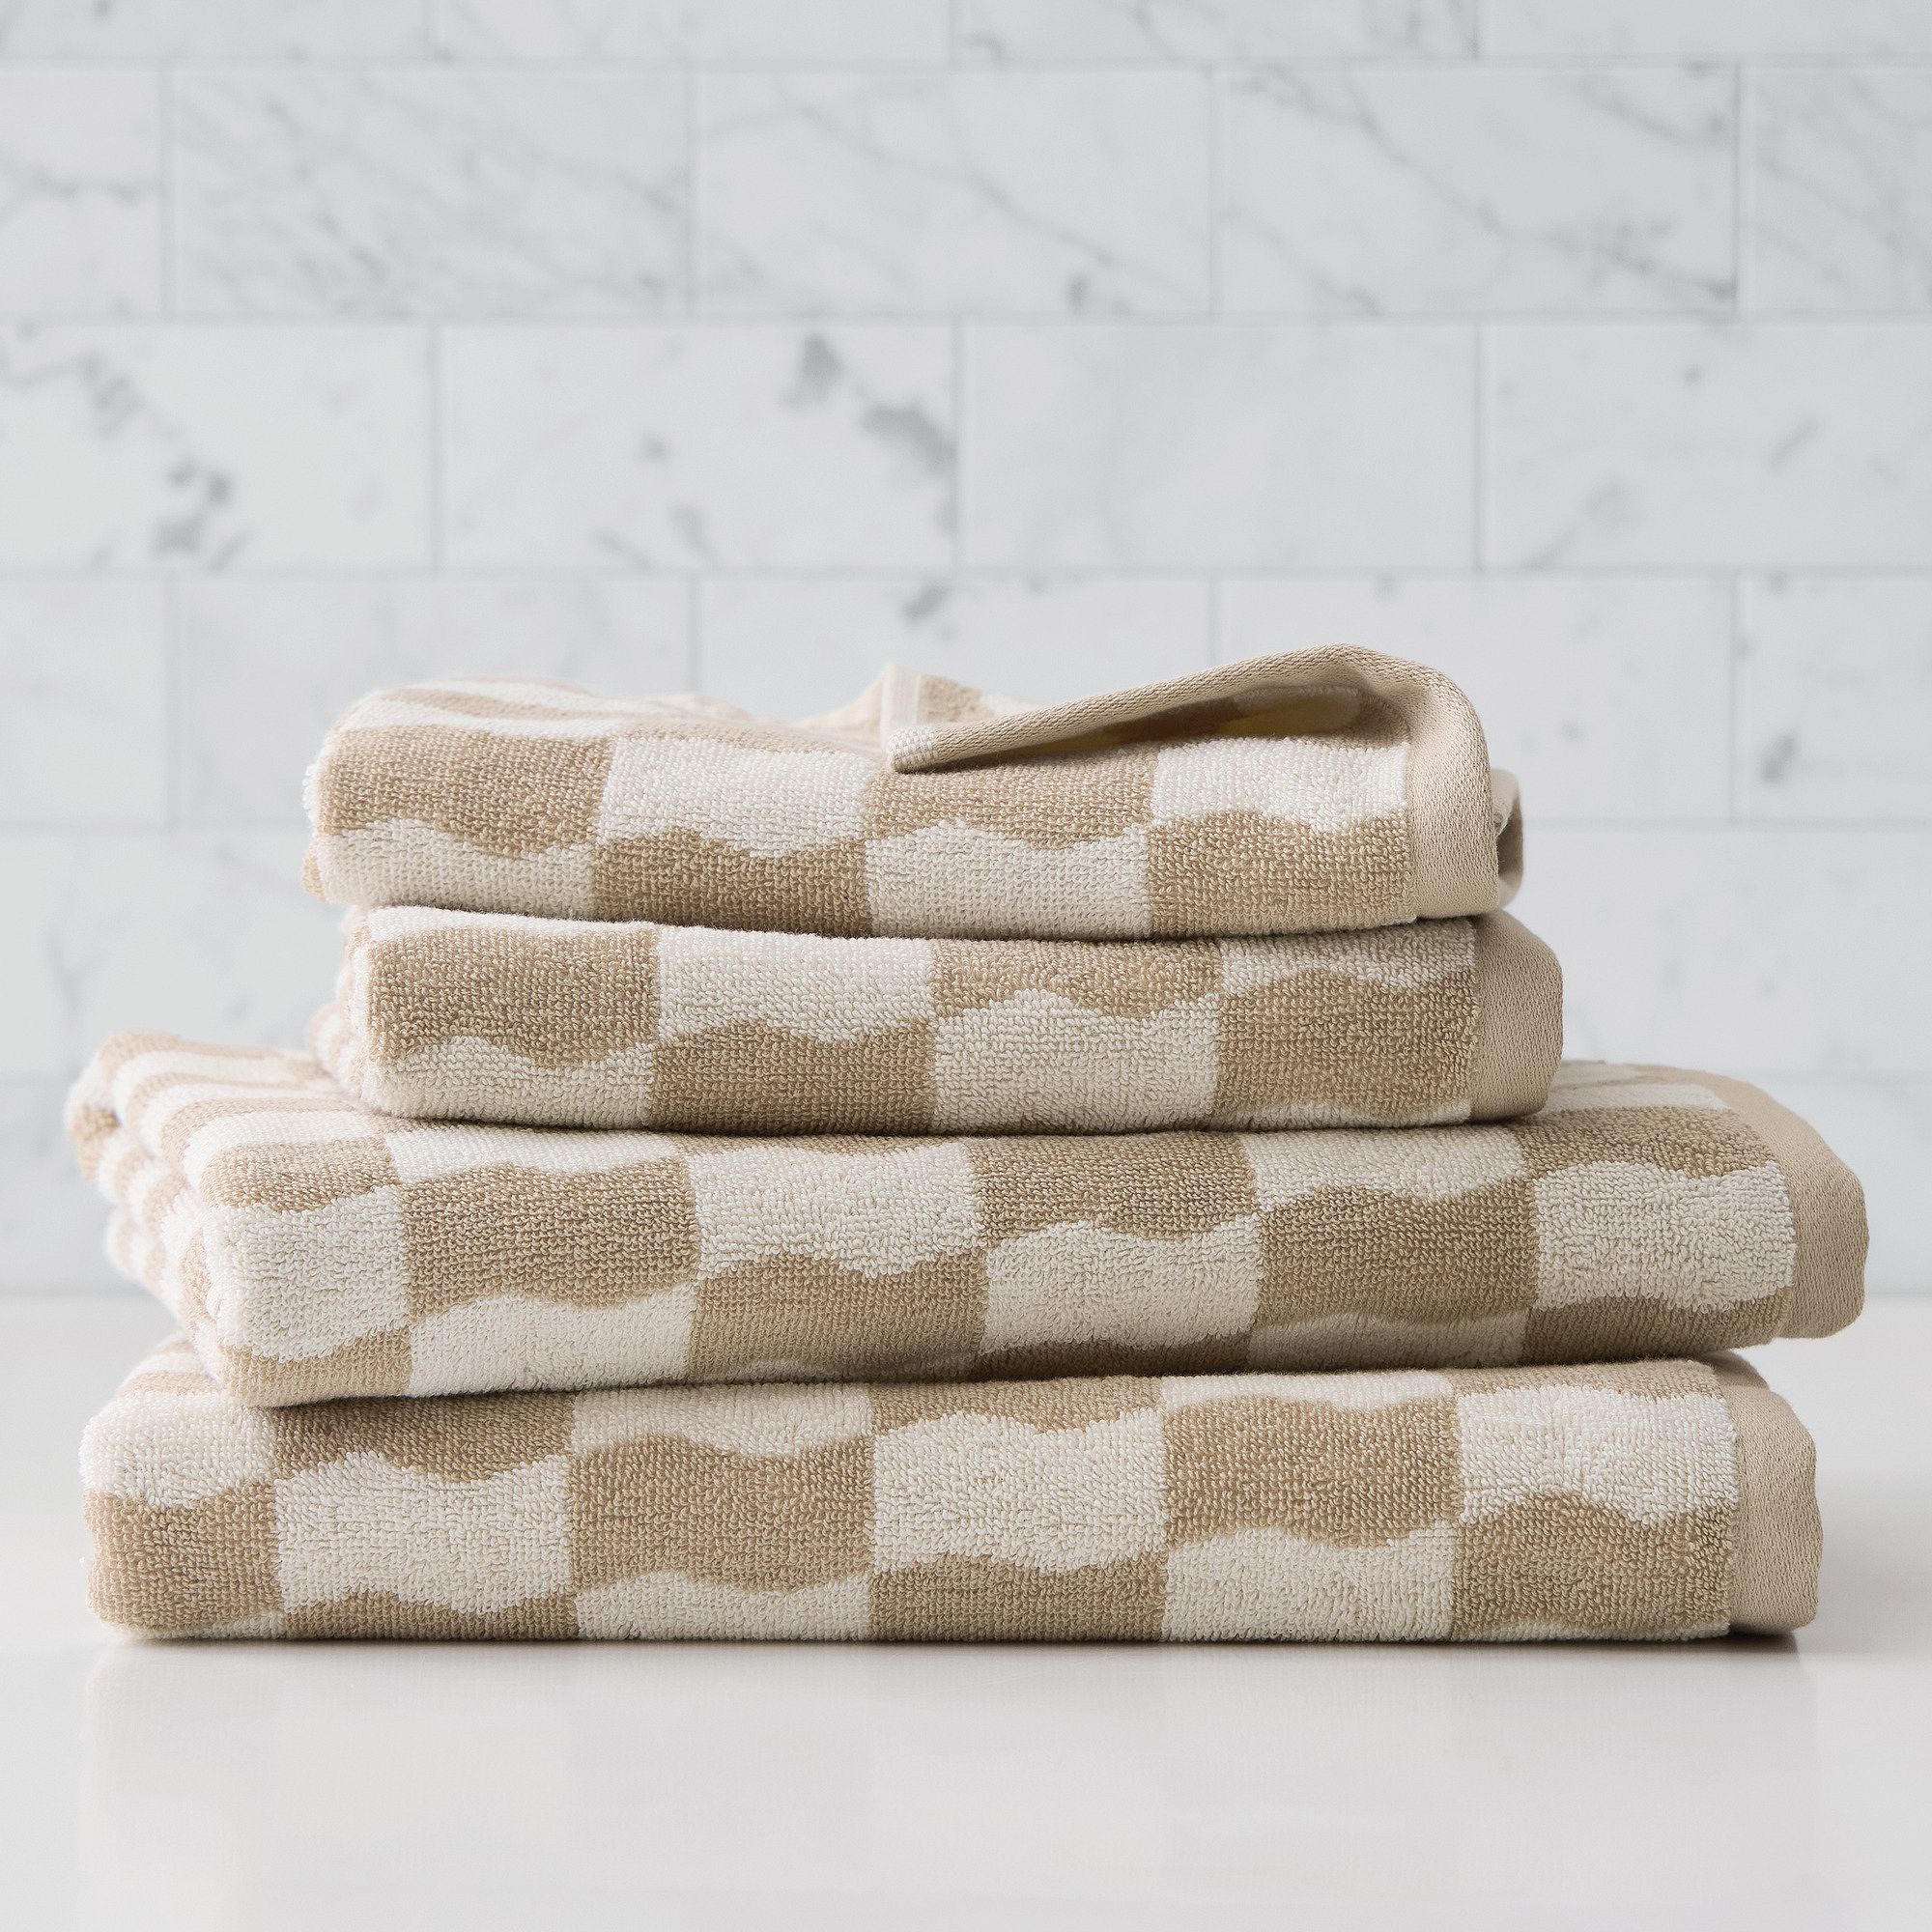 Wavy Blocks Towel Sets | West Elm